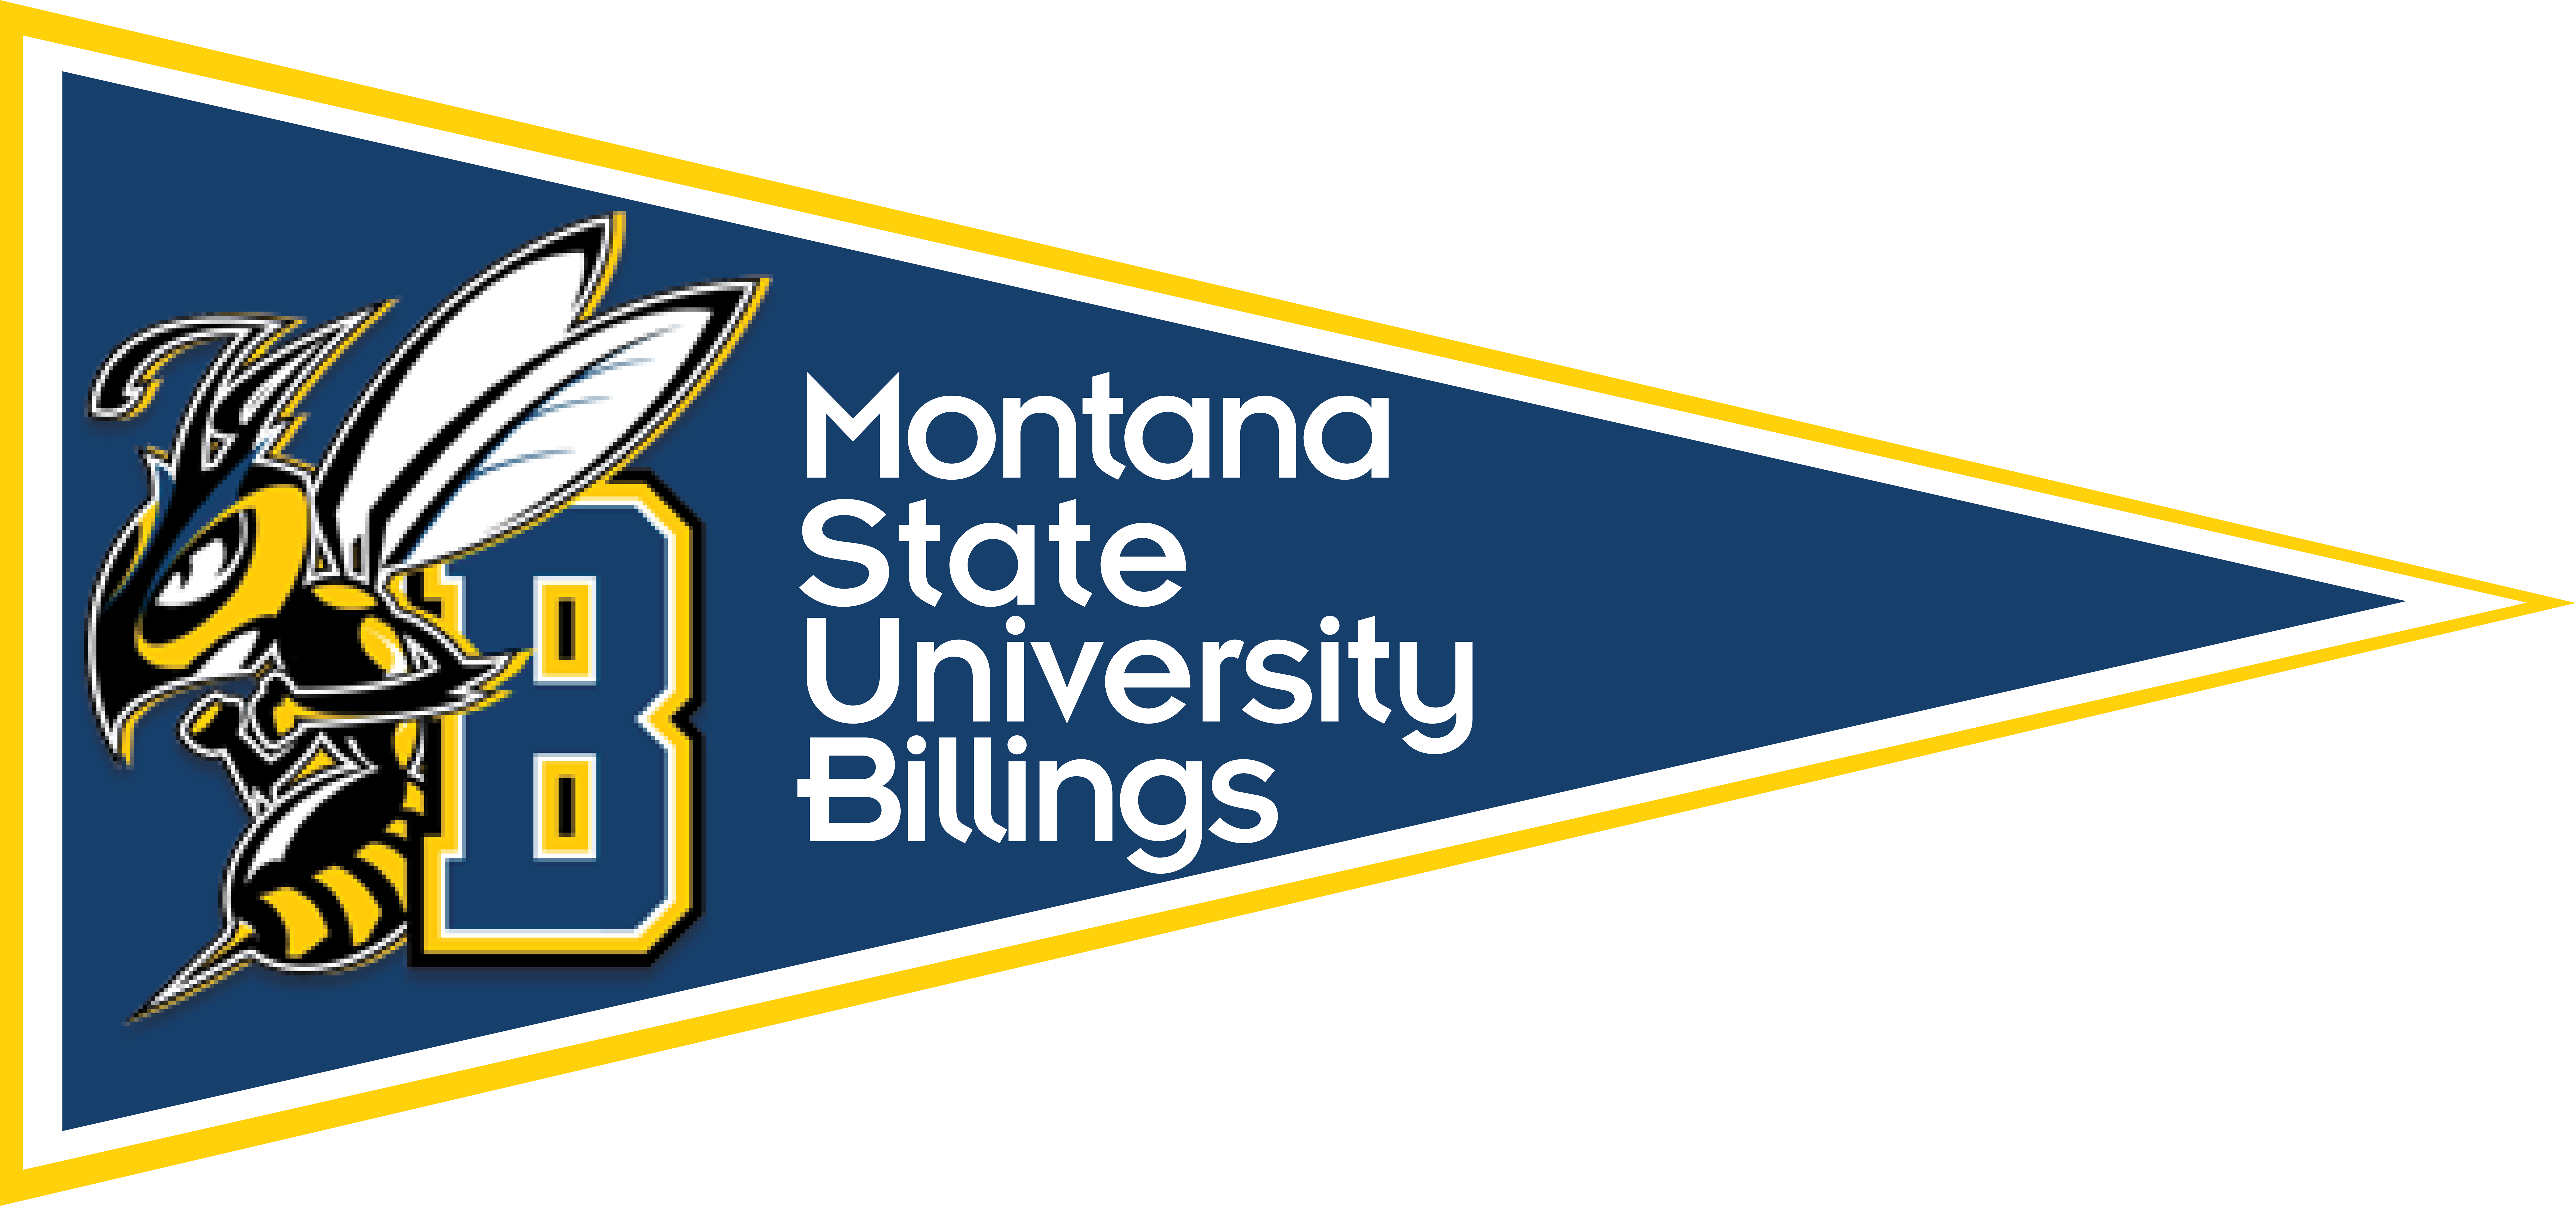 Montana State University Billings Pennant - Montana State University Billings (10000x4682)